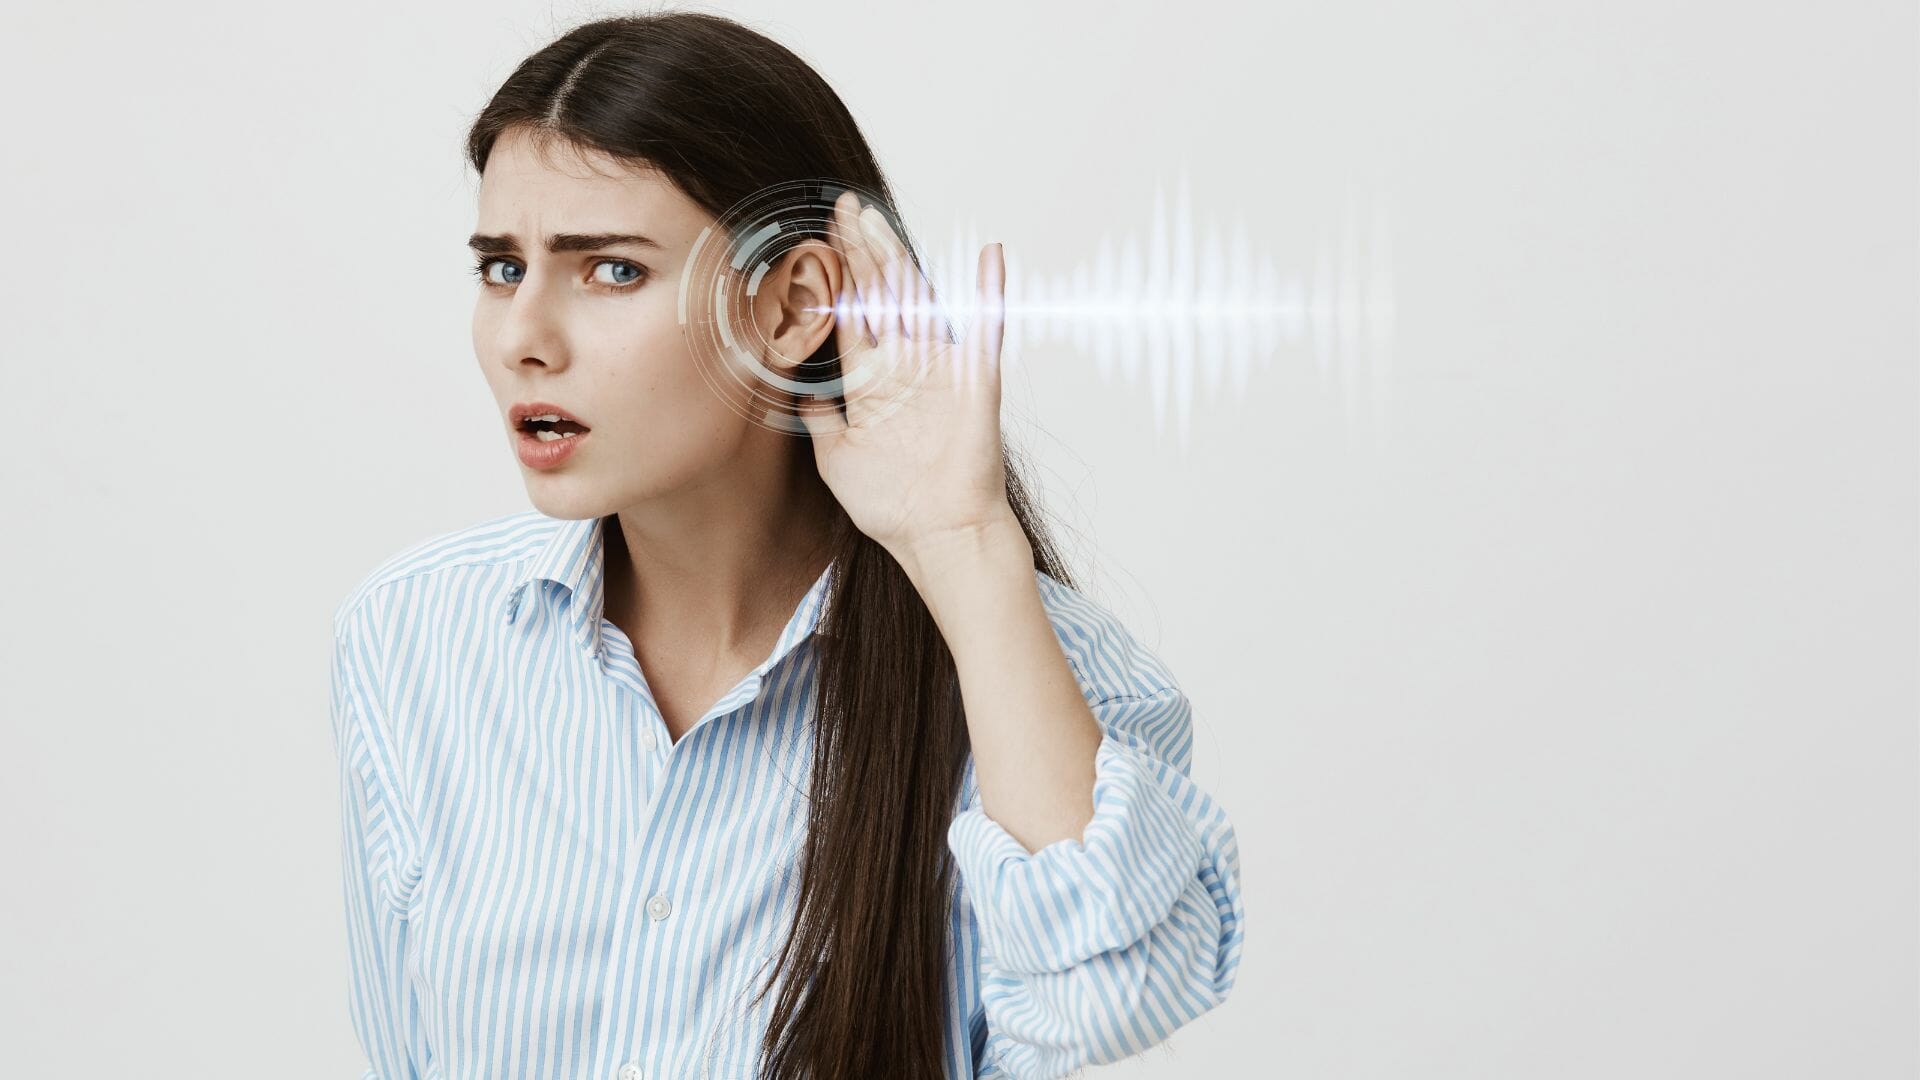 3M Earplug - hearing loss